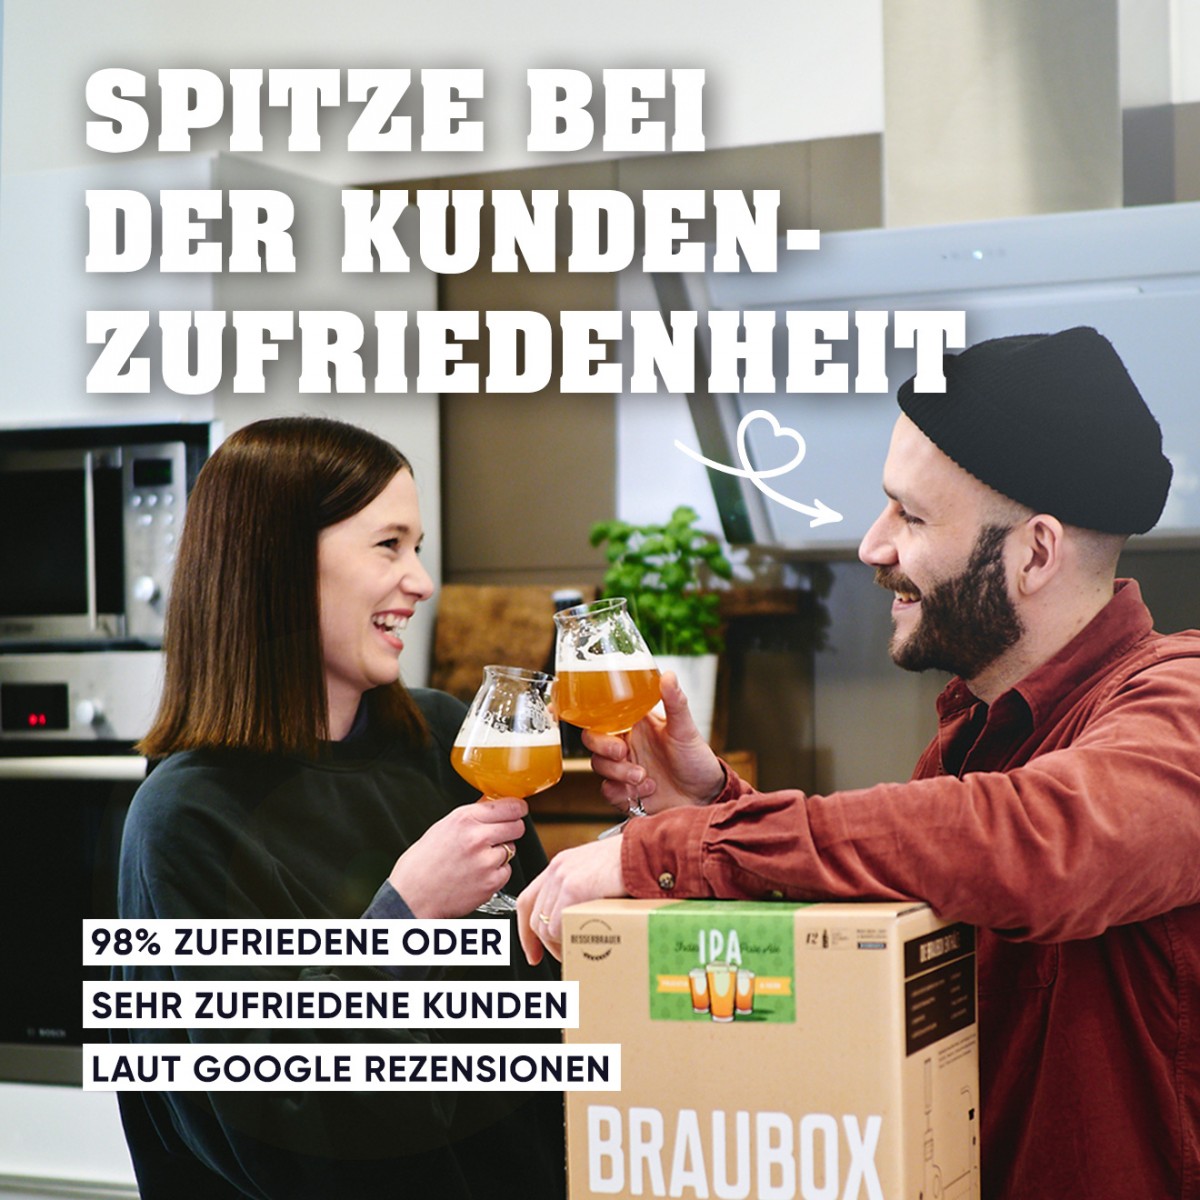 Braubox “Weizenbier” – Besserbrauer Bierbrausets